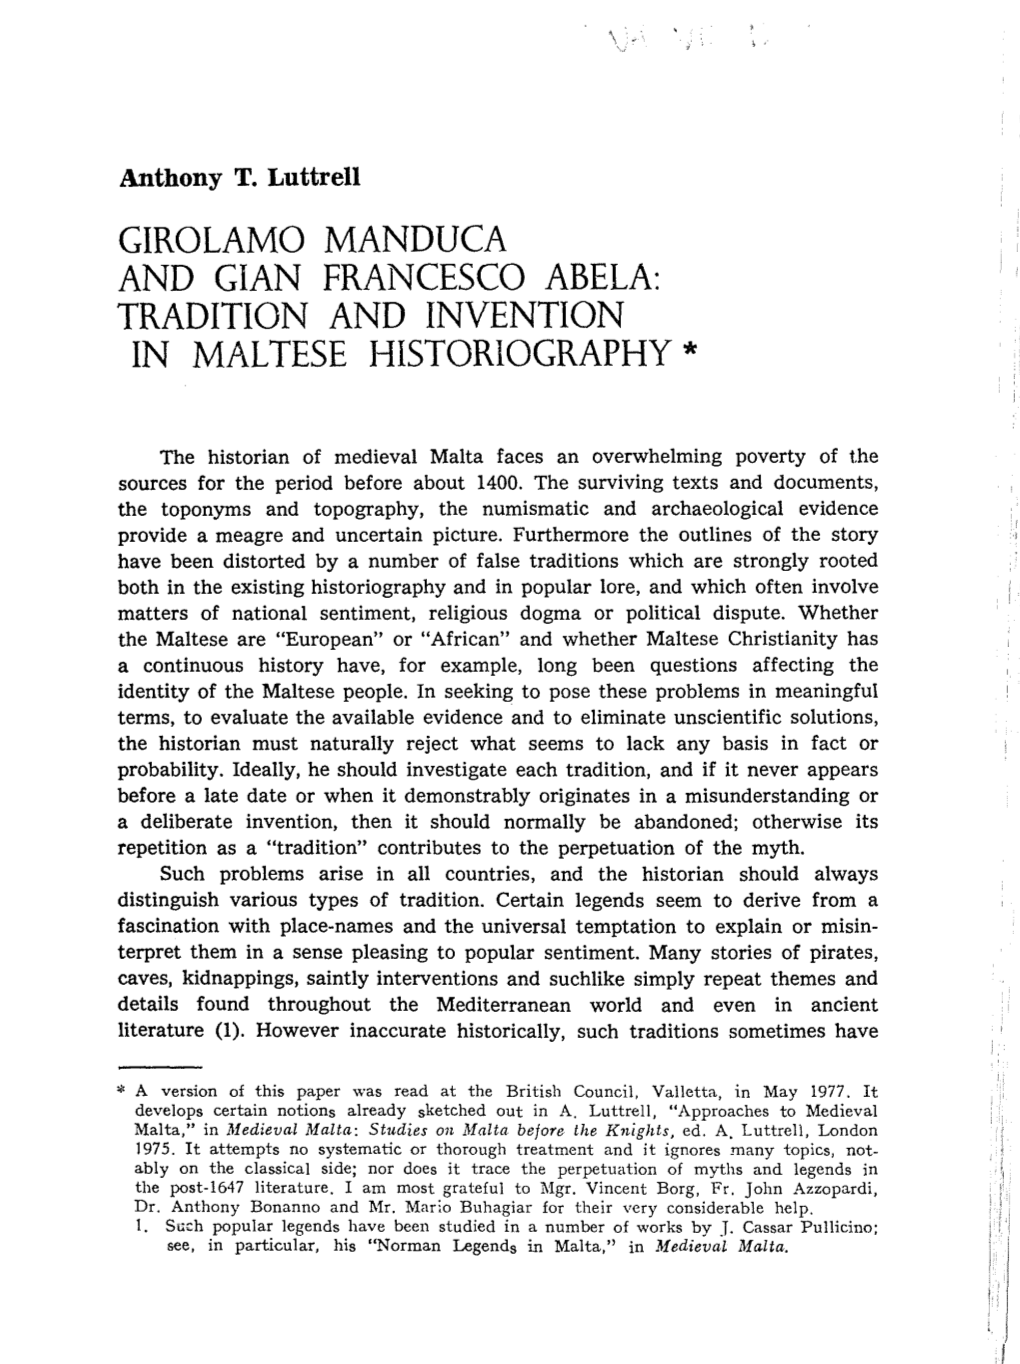 Girolamo Manduca and Gian Francesco Abela: Tradition and Invention in Maltese Historiography *